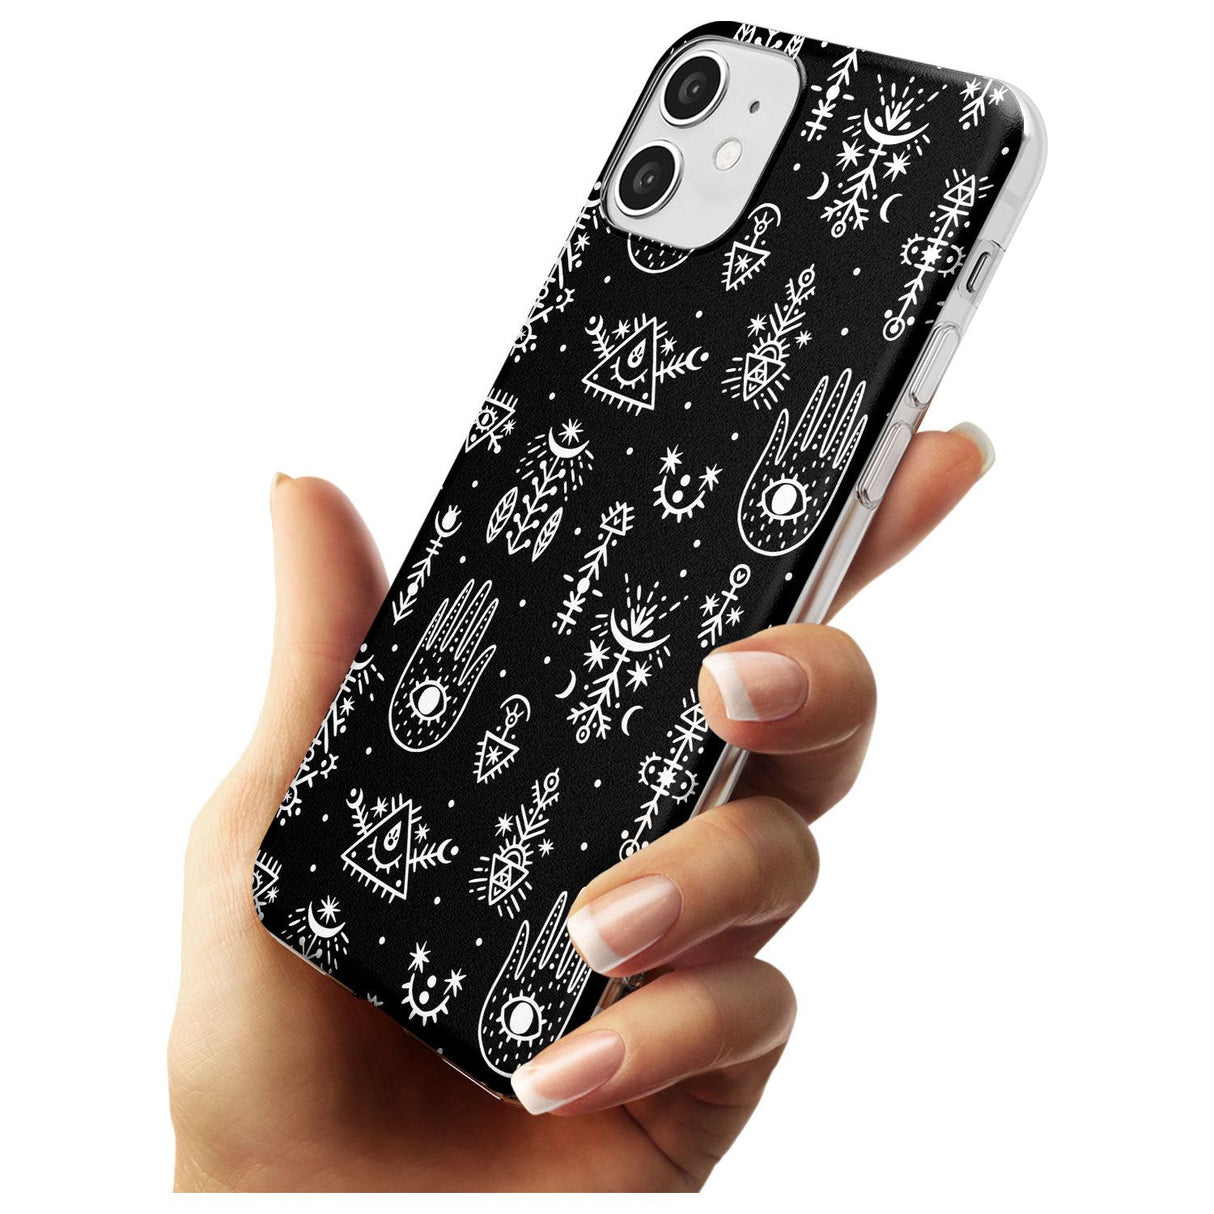 Tribal Palms - White on Black Slim TPU Phone Case for iPhone 11